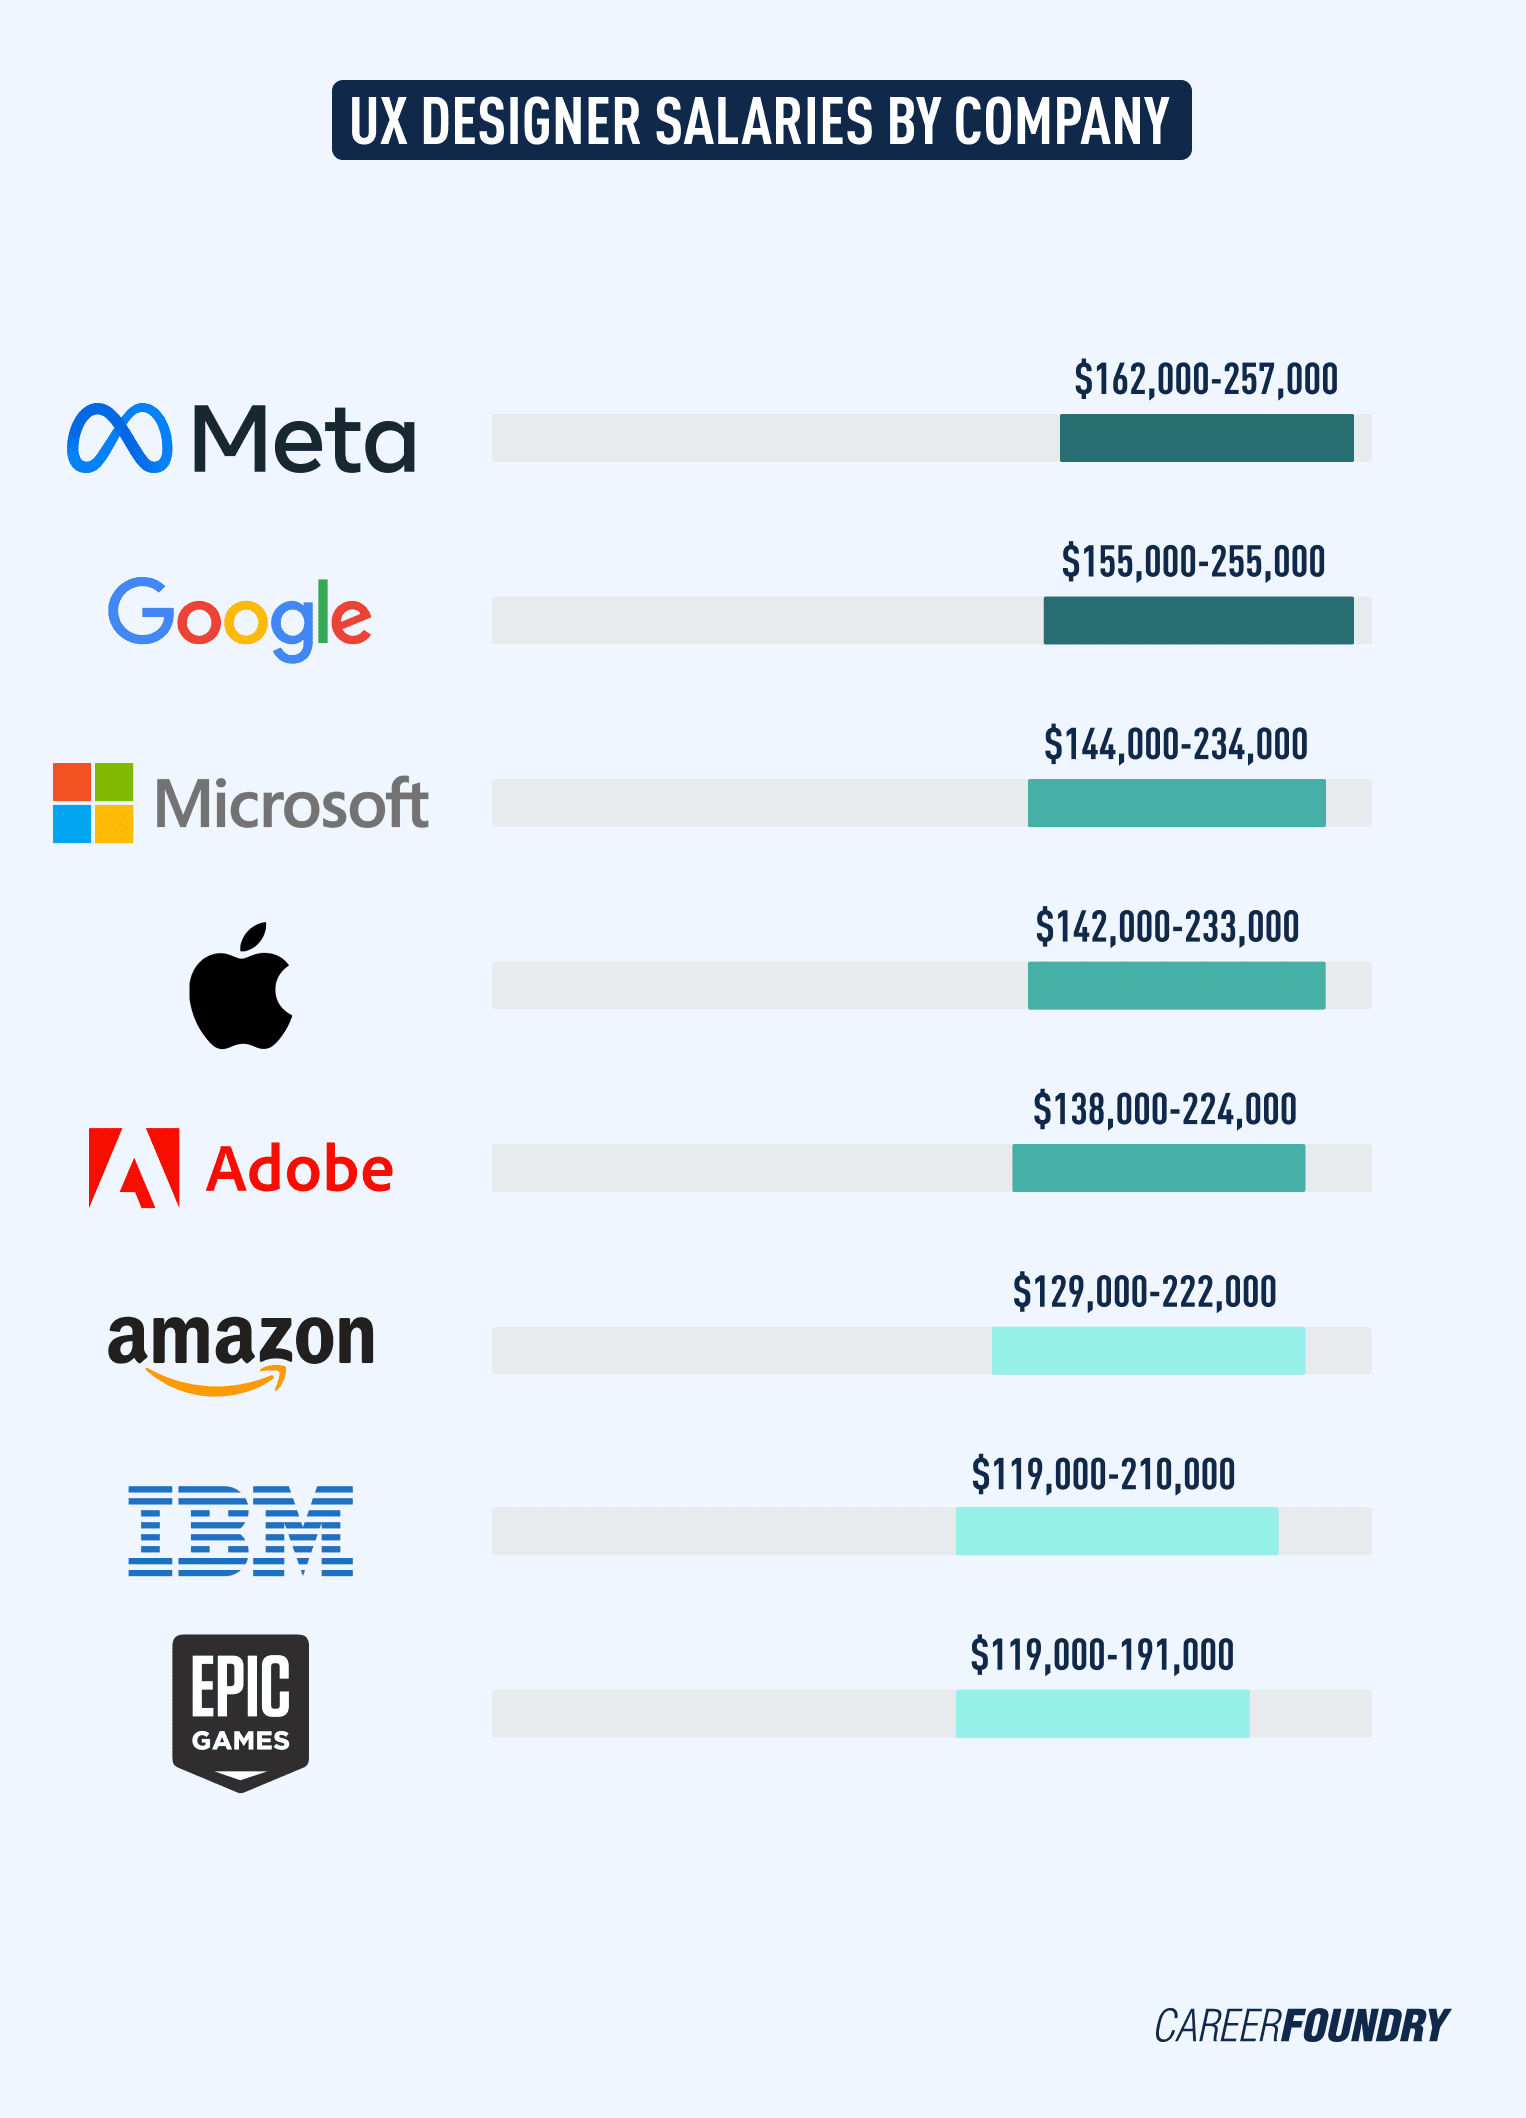 UX designer salary range at major companies 